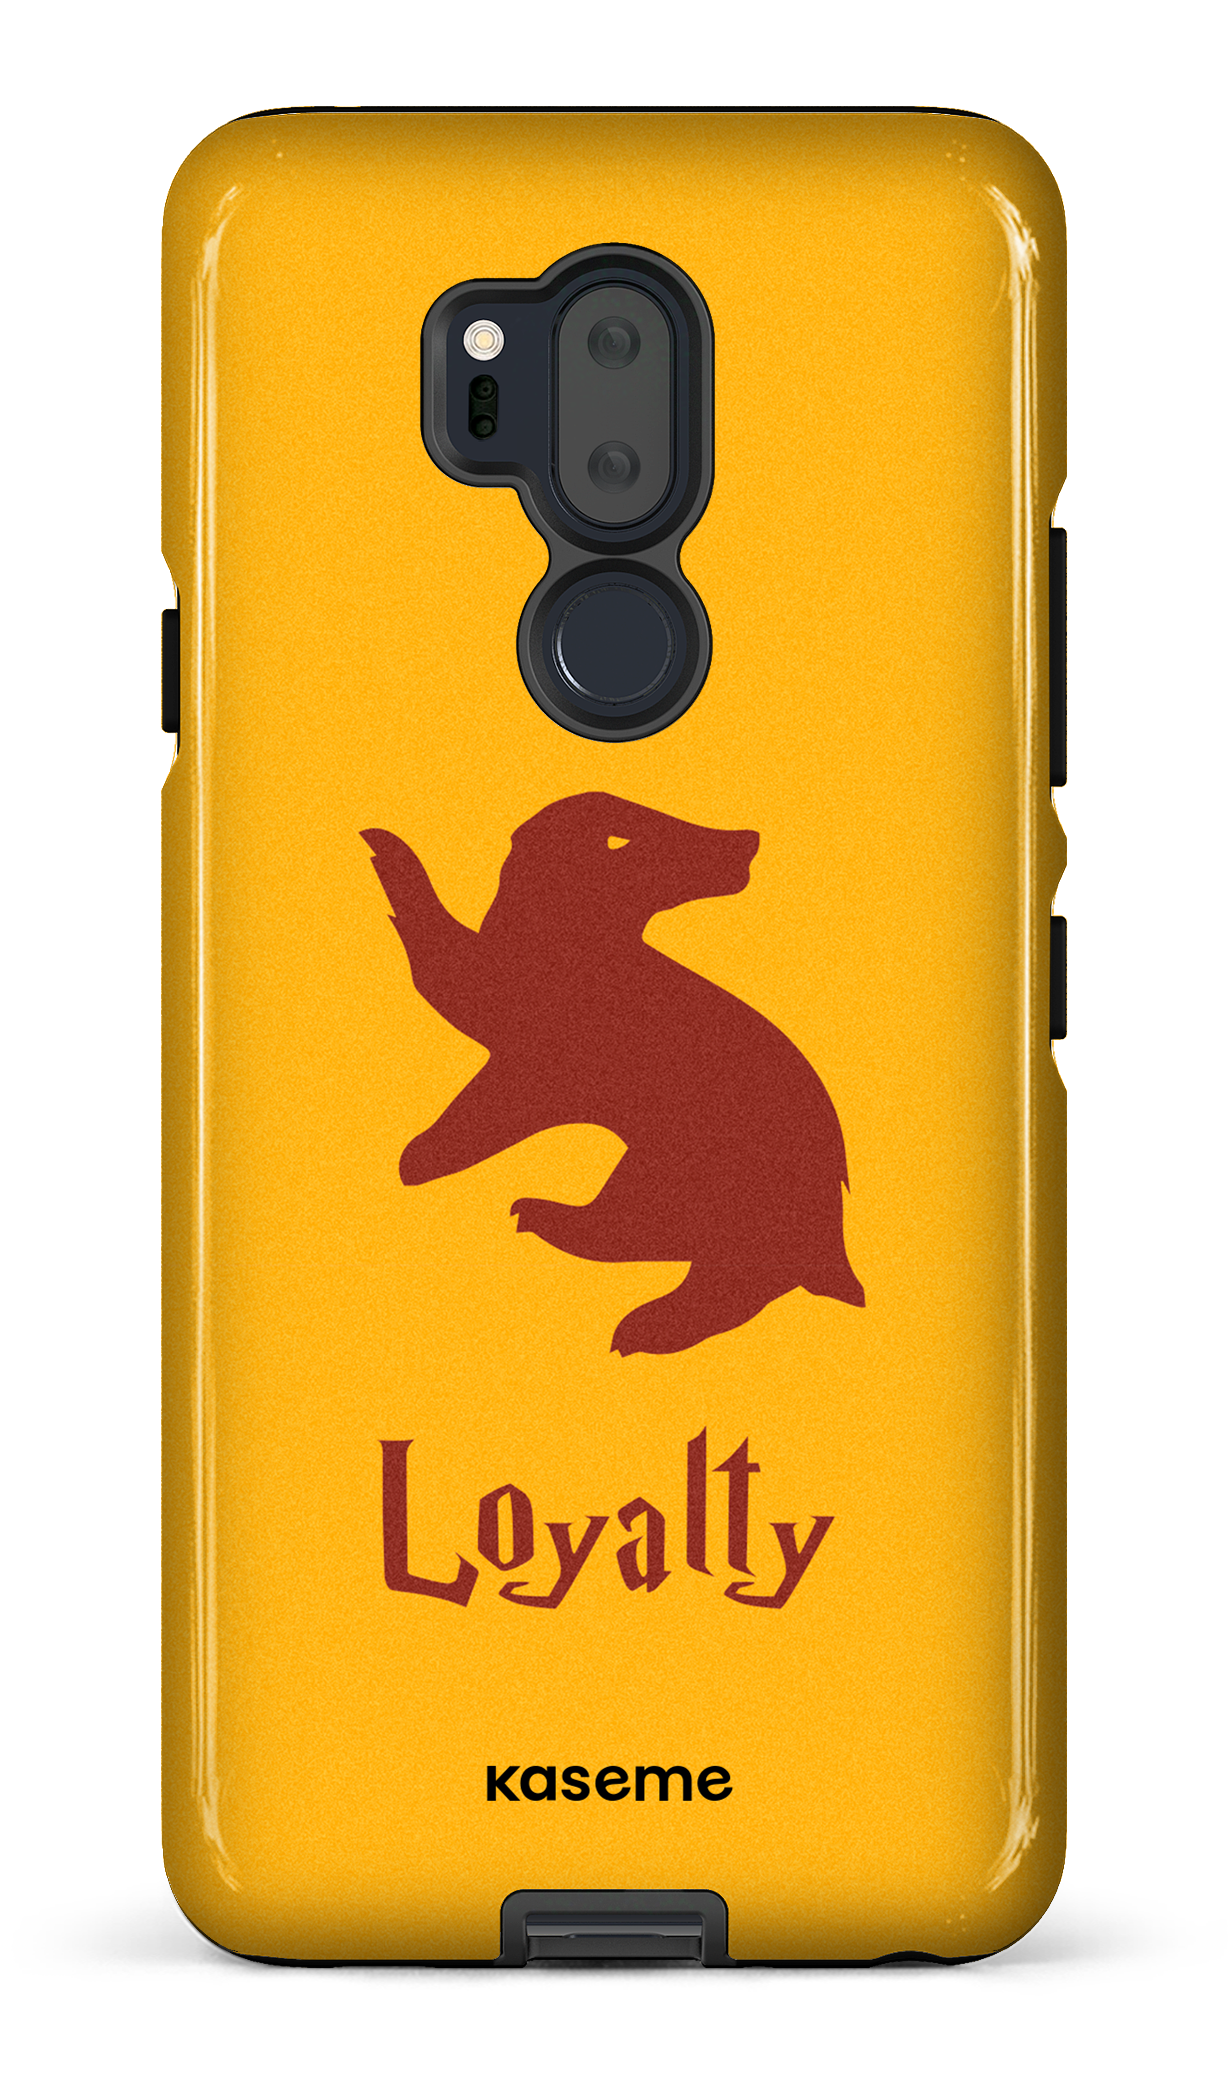 Loyalty - LG G7